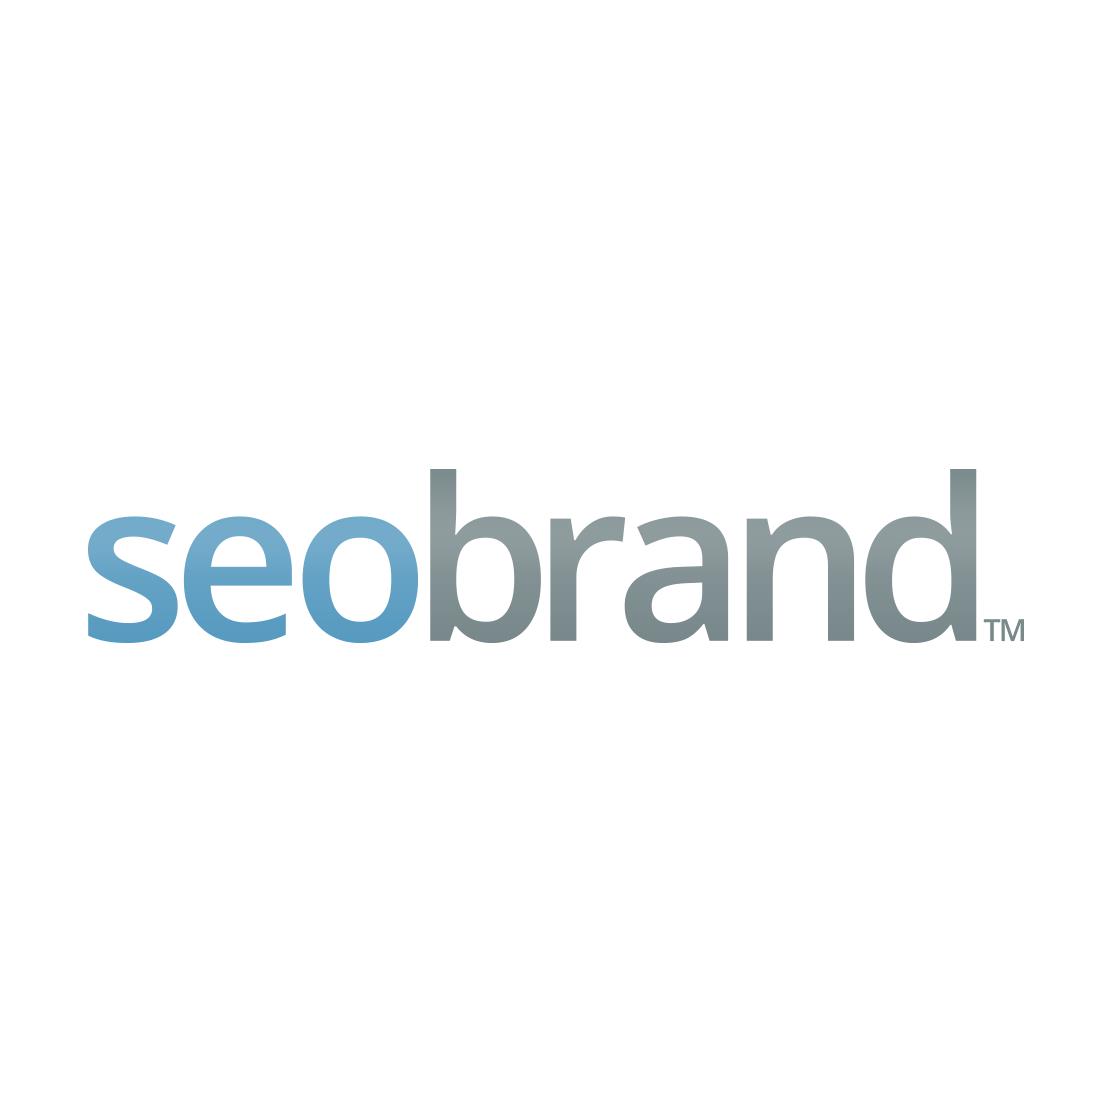 Top Real Estate SEO Company Logo: SEO Brand